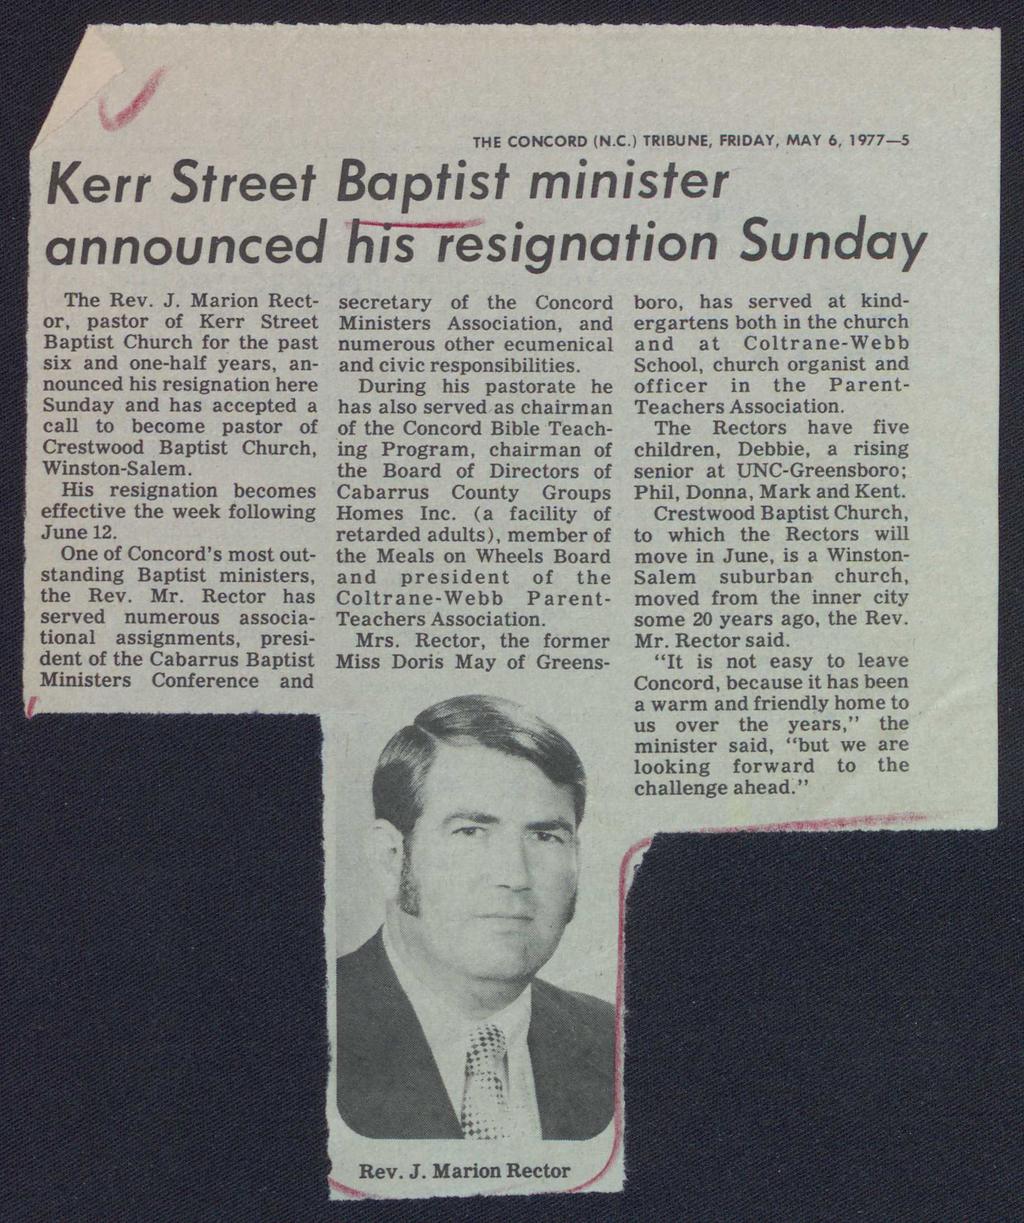 THE CONCORD (N.C.) TRIBUNE, FRIDAY, MAY 6, 1977-5 Kerr Street Baptist minister announced Fiis resignation The Rev. J.